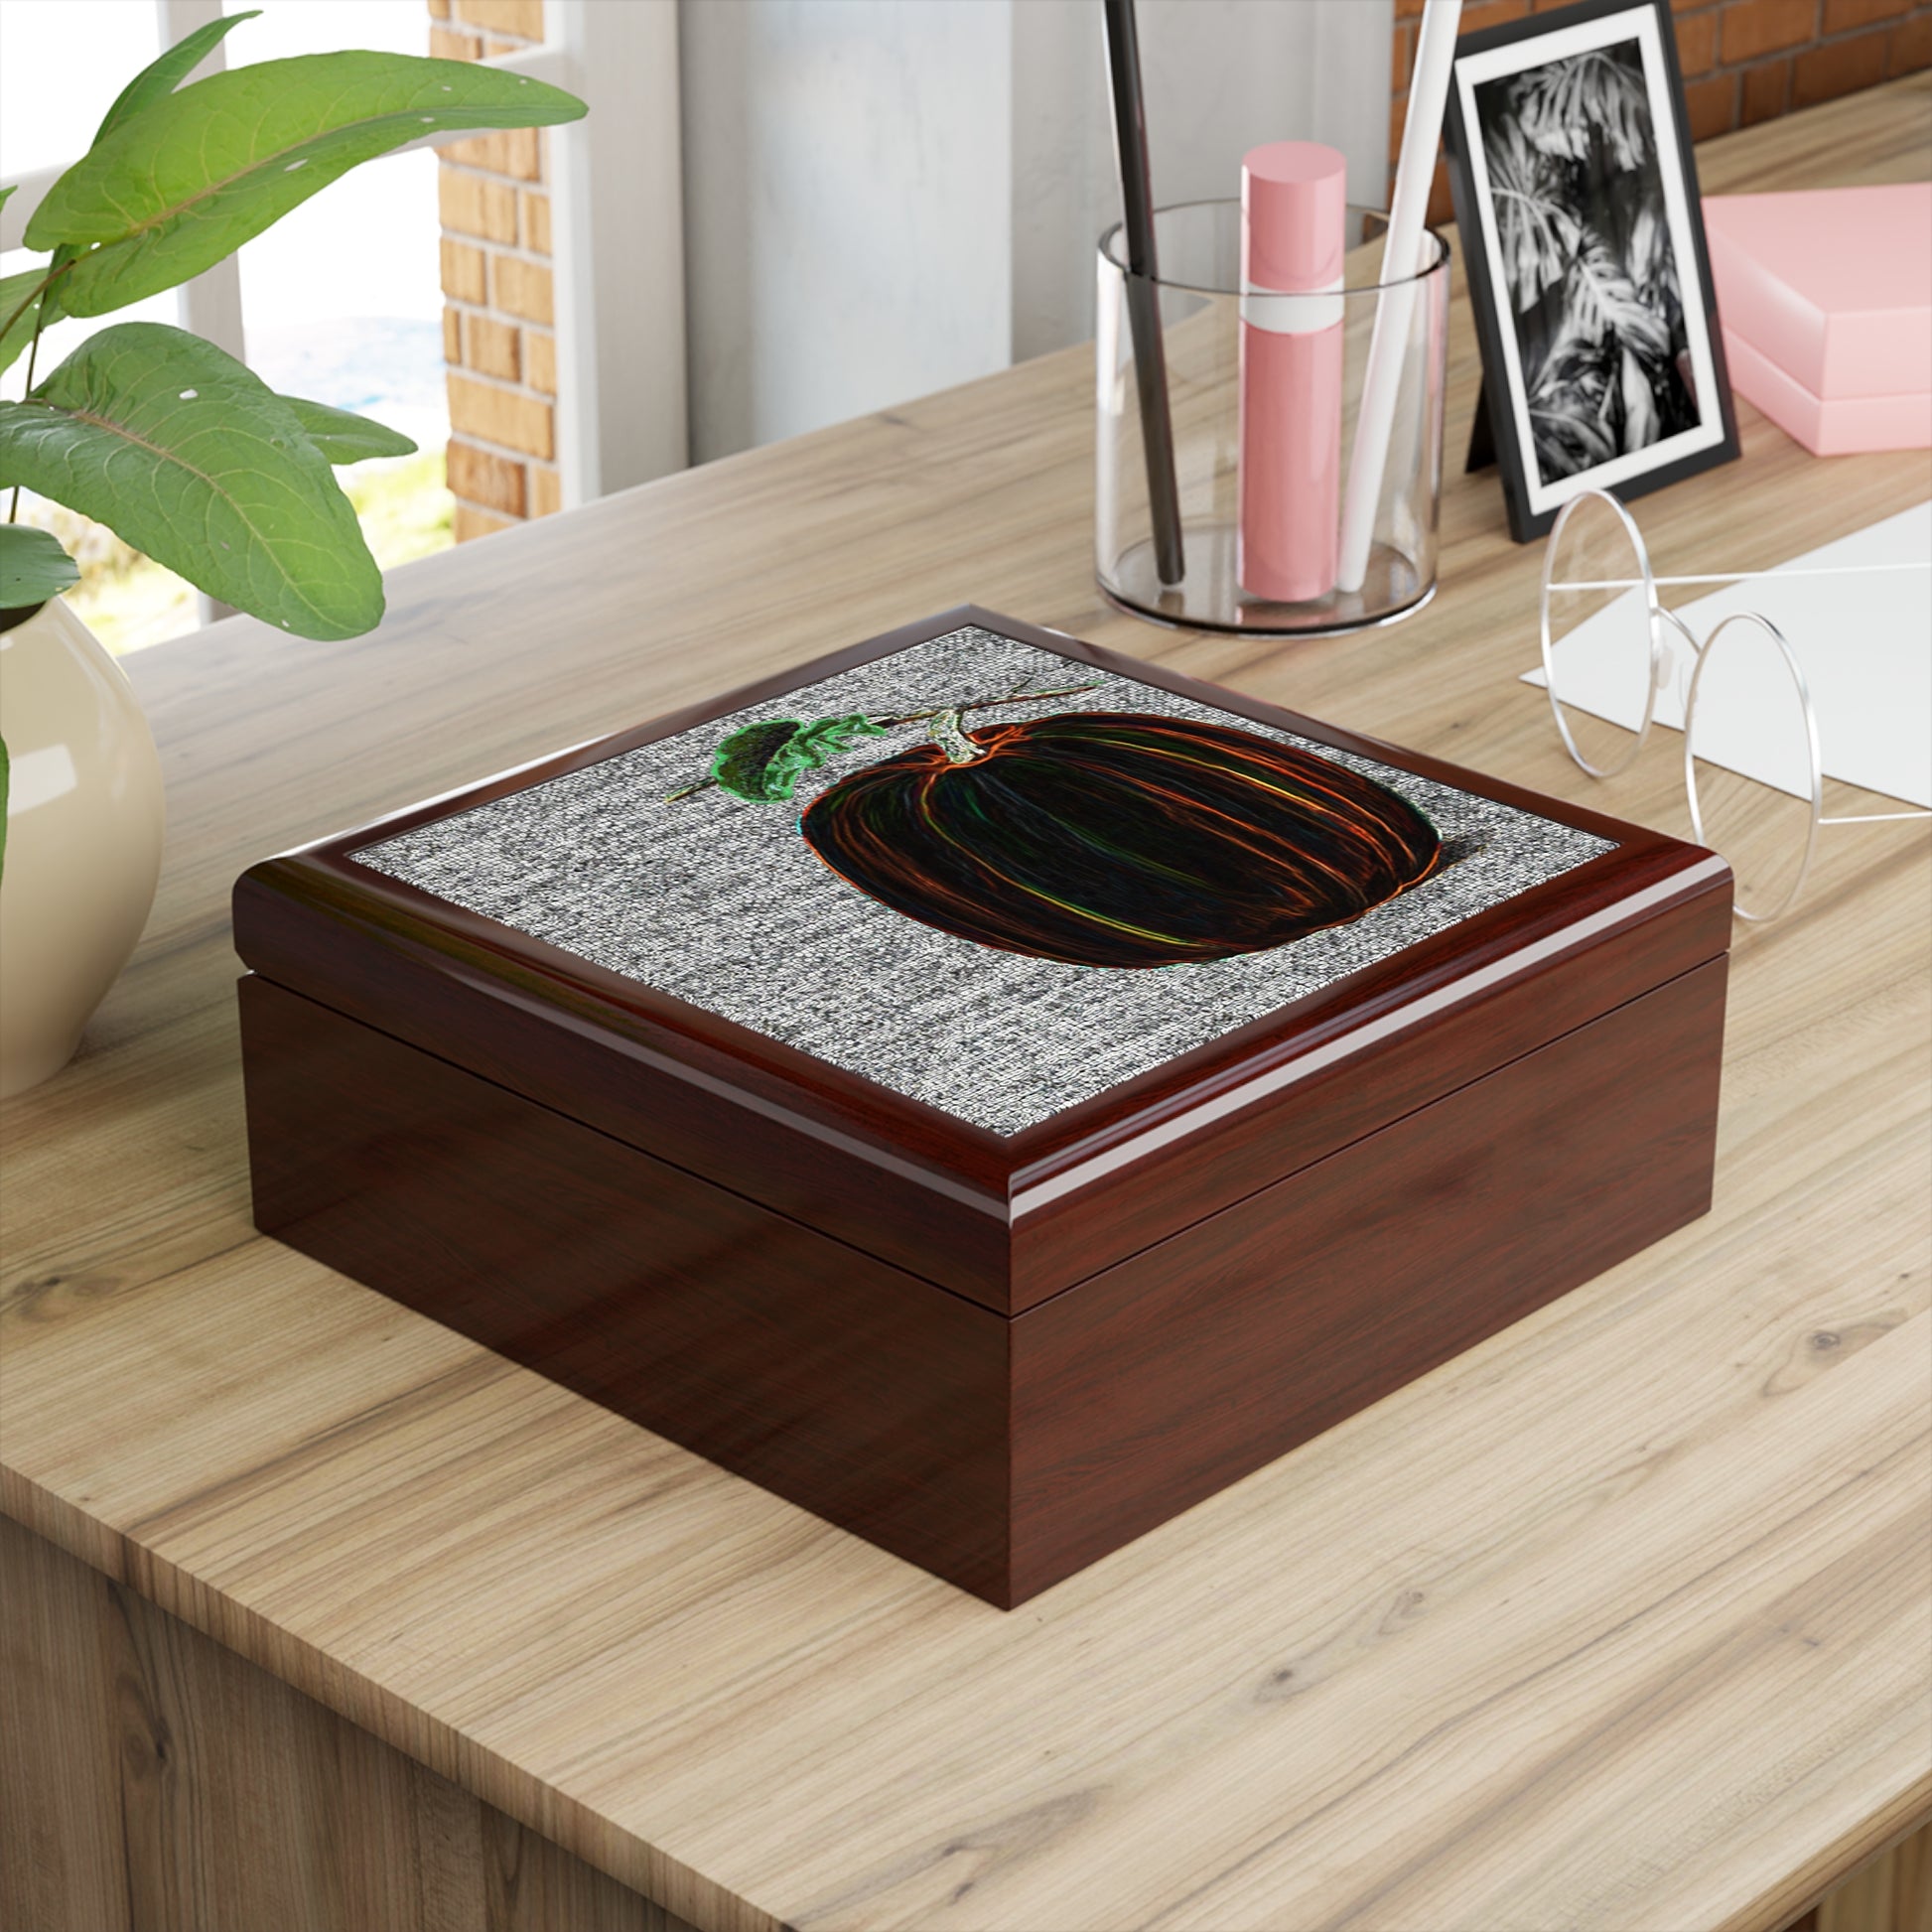 Keepsake/Jewelry Box - Magical Pumpkin - Lacquer Wood Box  mahogany wood box